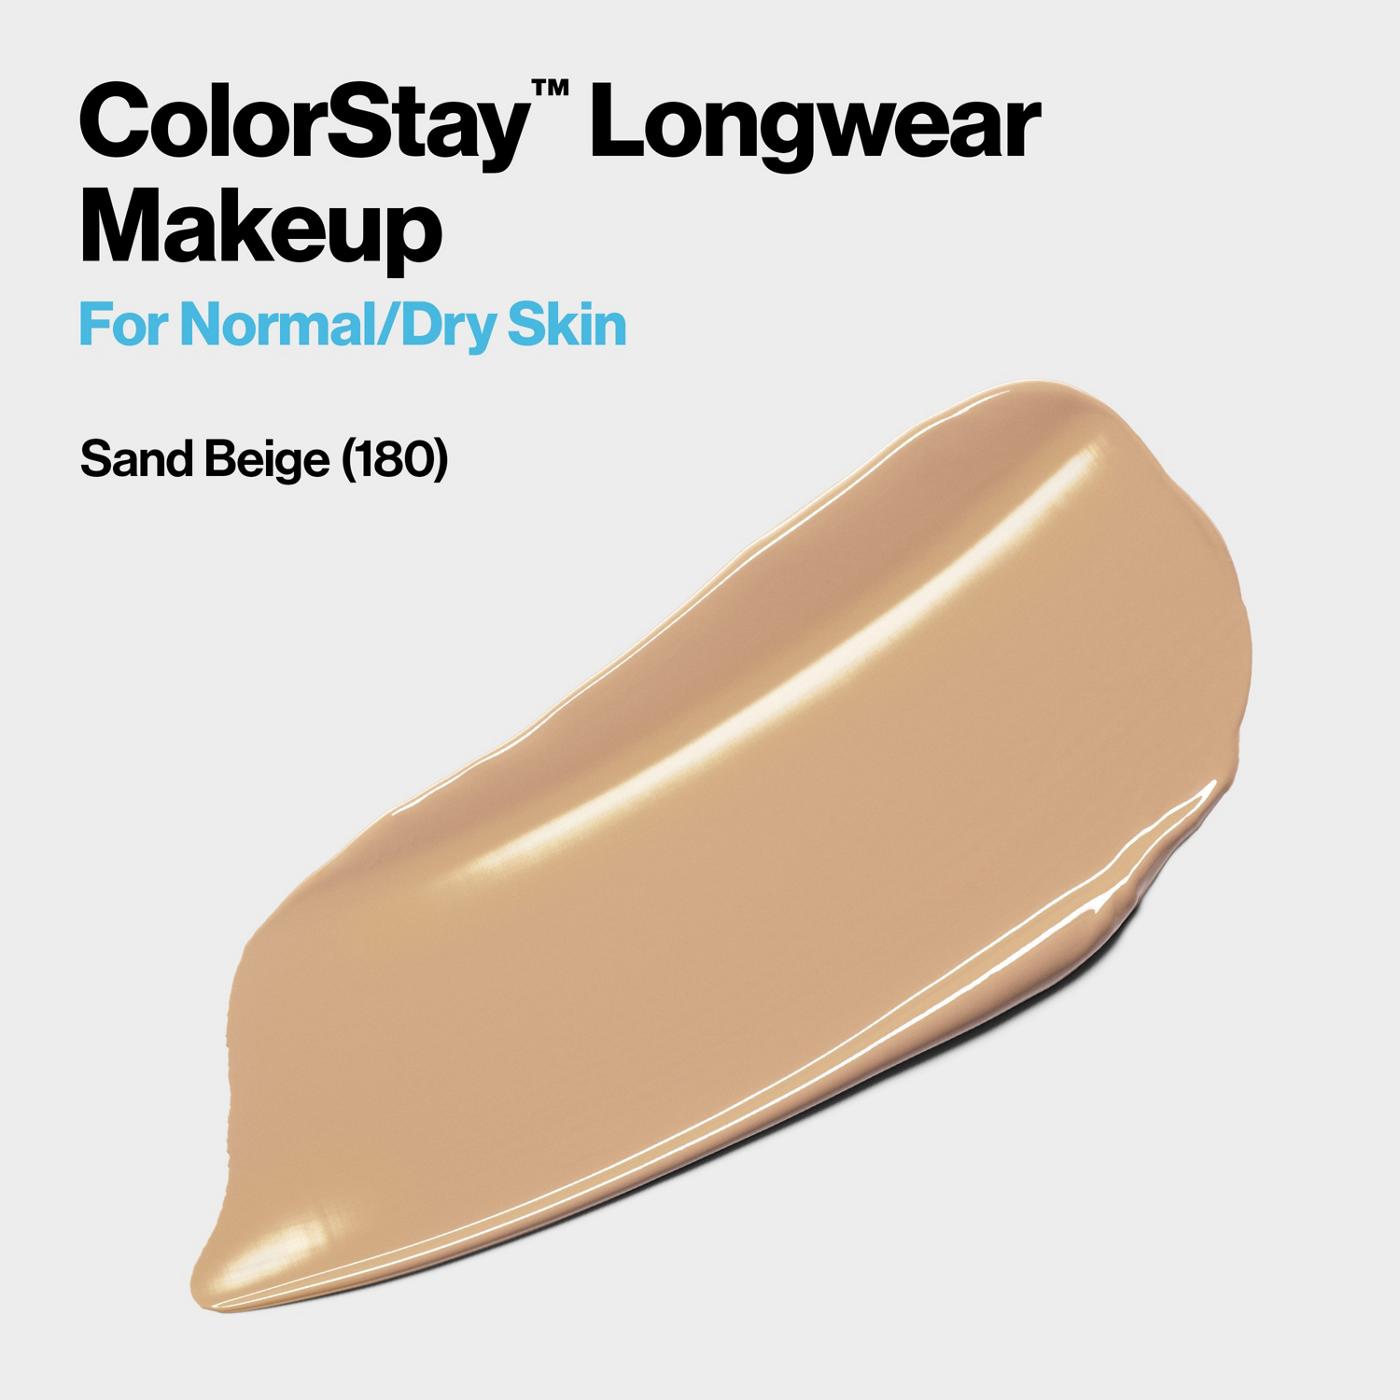 Revlon ColorStay Foundation for Normal/Dry Skin - 180 Sand Beige; image 5 of 5